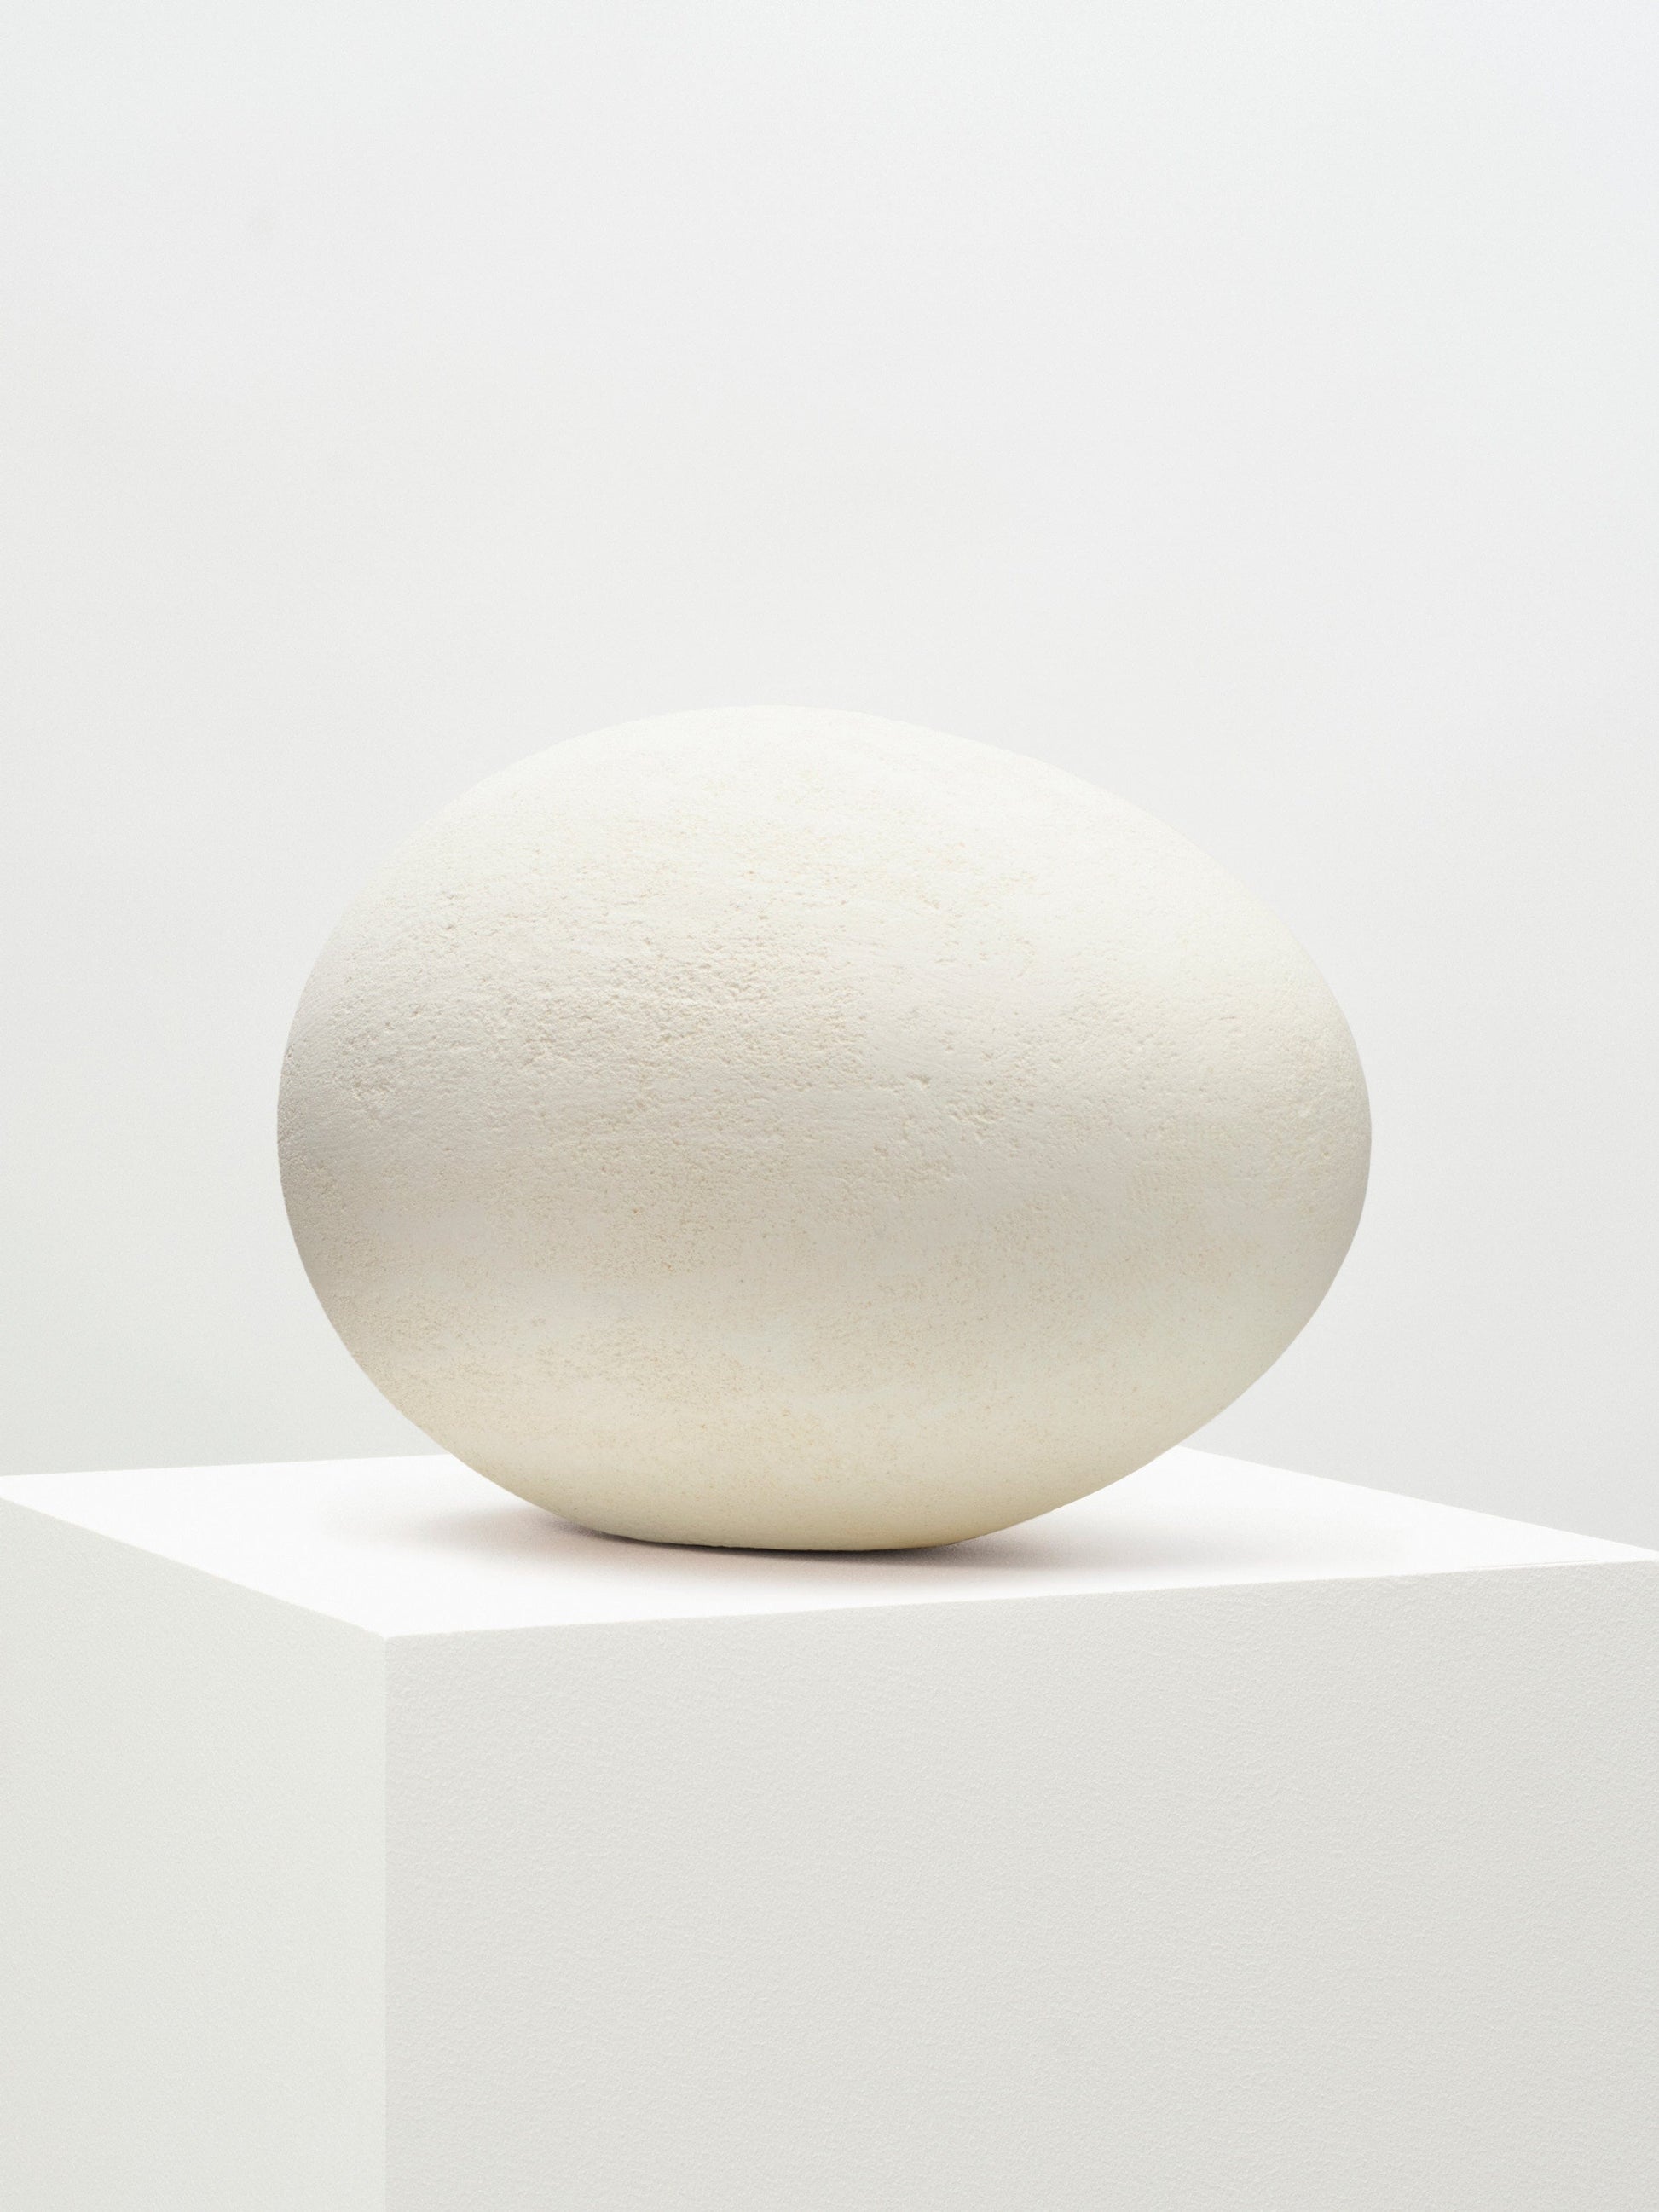 Limestone Egg Sculpture sculptures